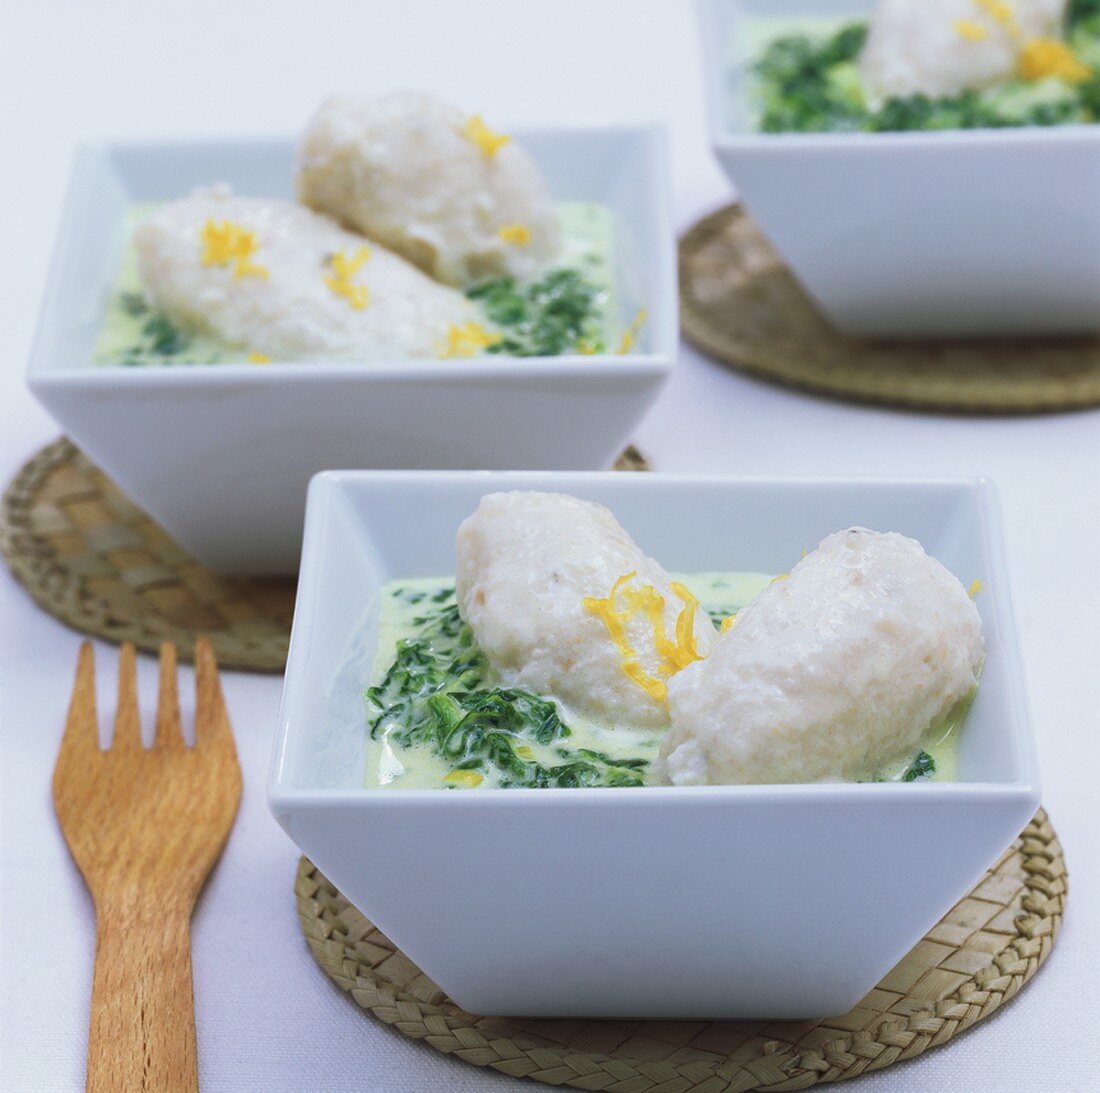 Fish dumplings in spinach cream sauce